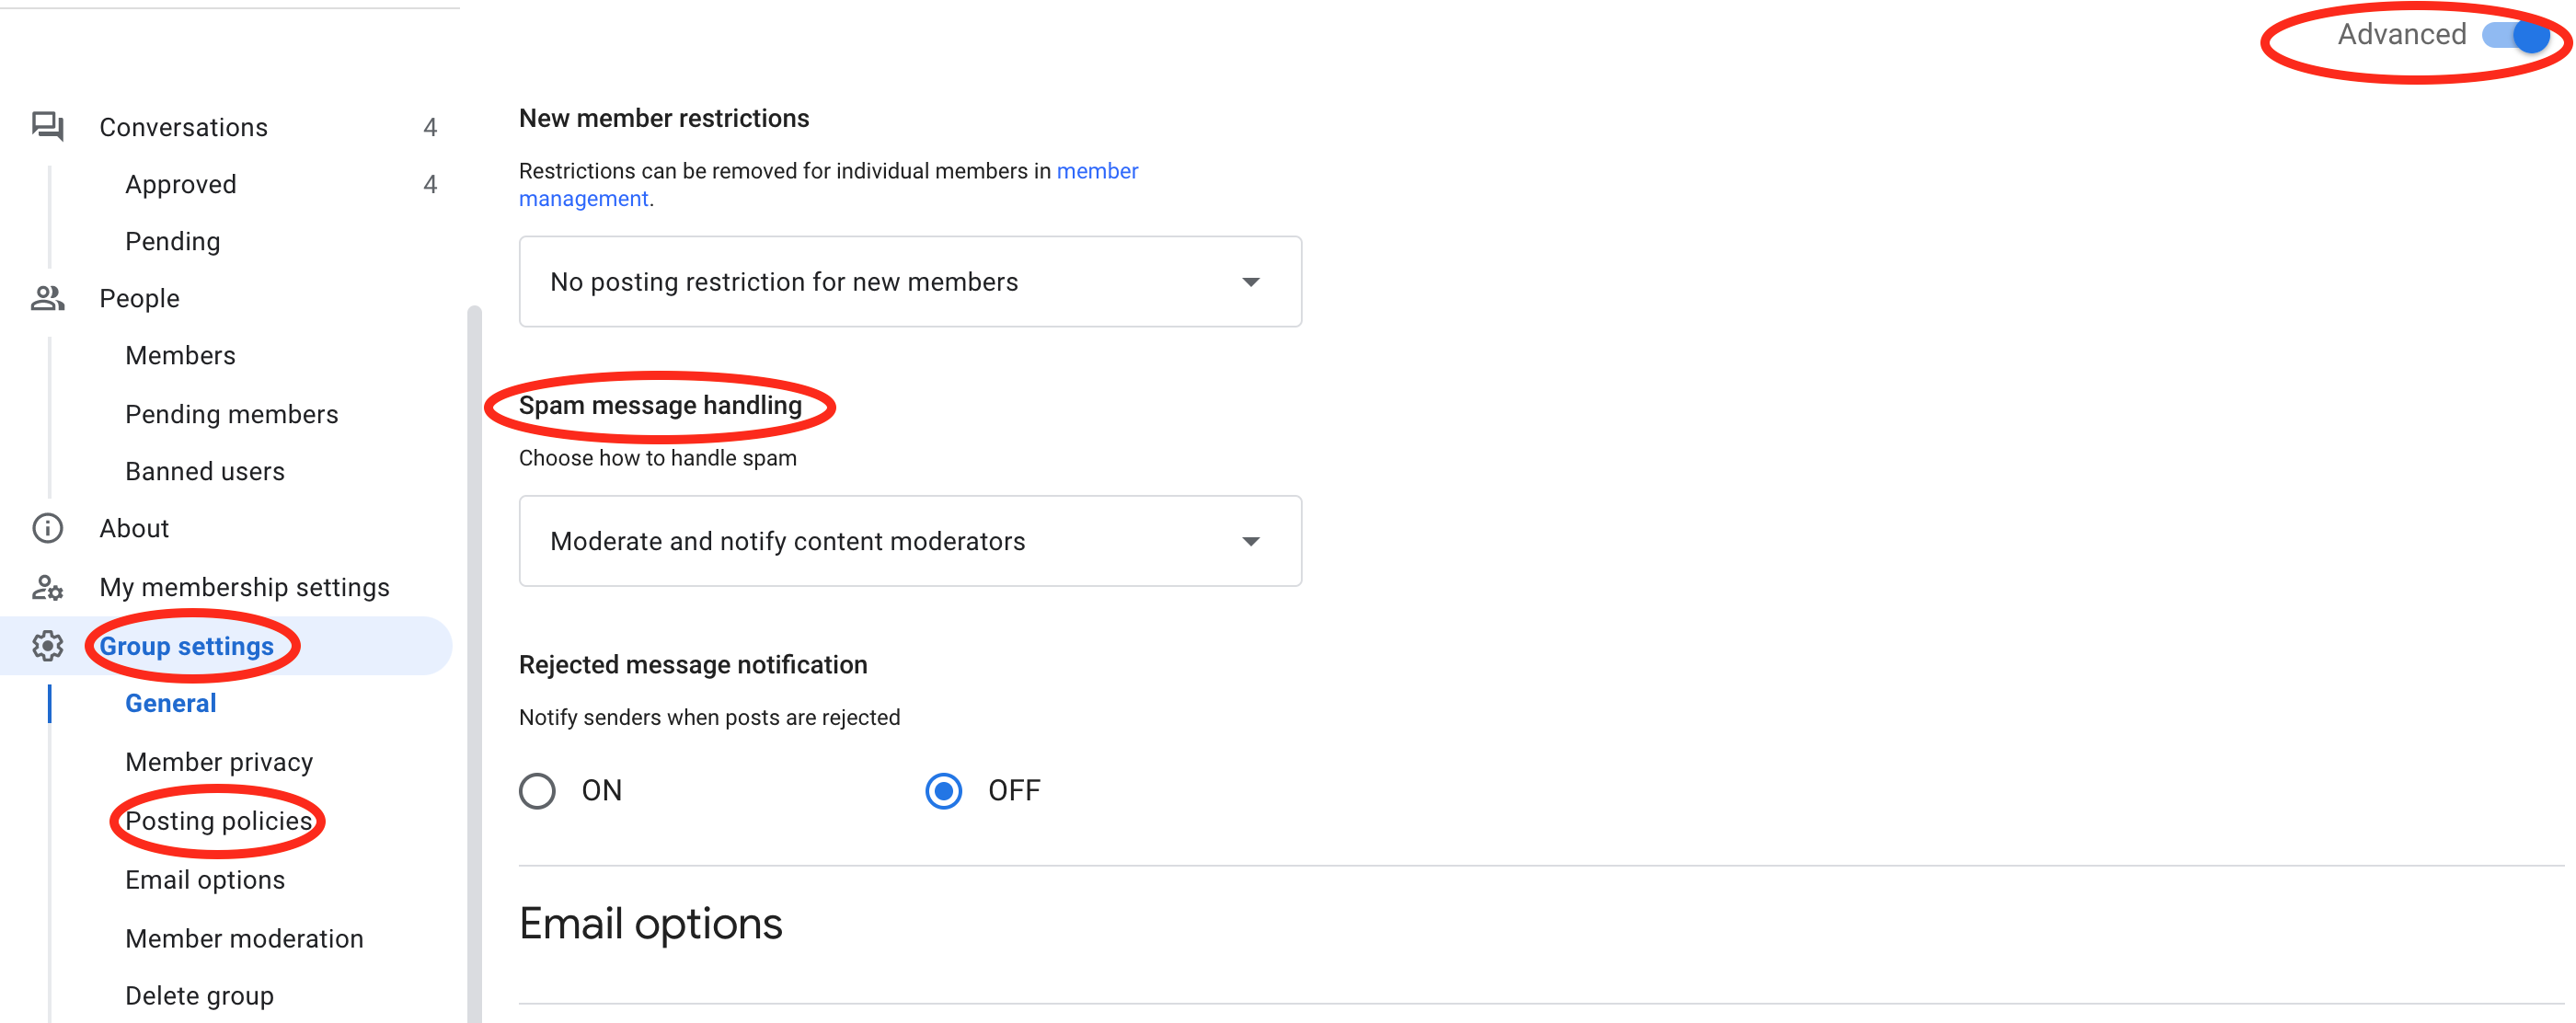 Spam message handling option in Google Groups.